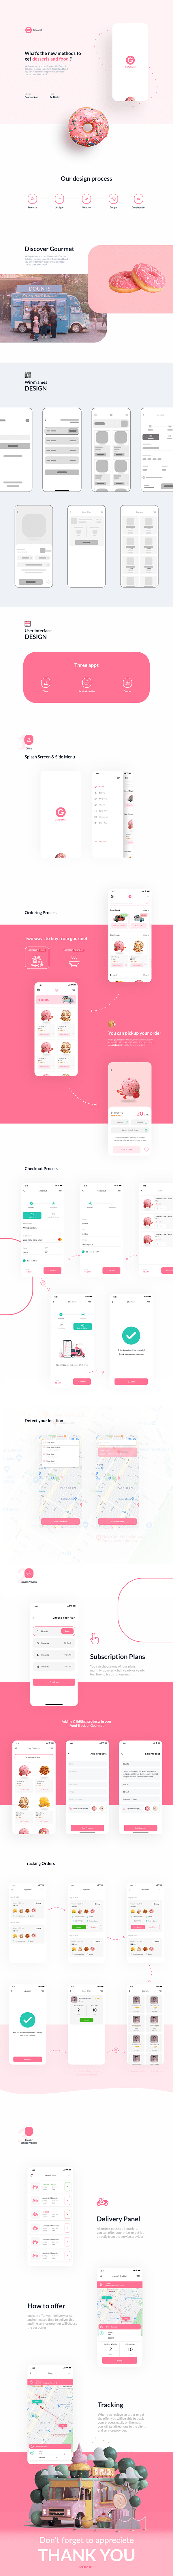 Sweets mobile app UI | UX